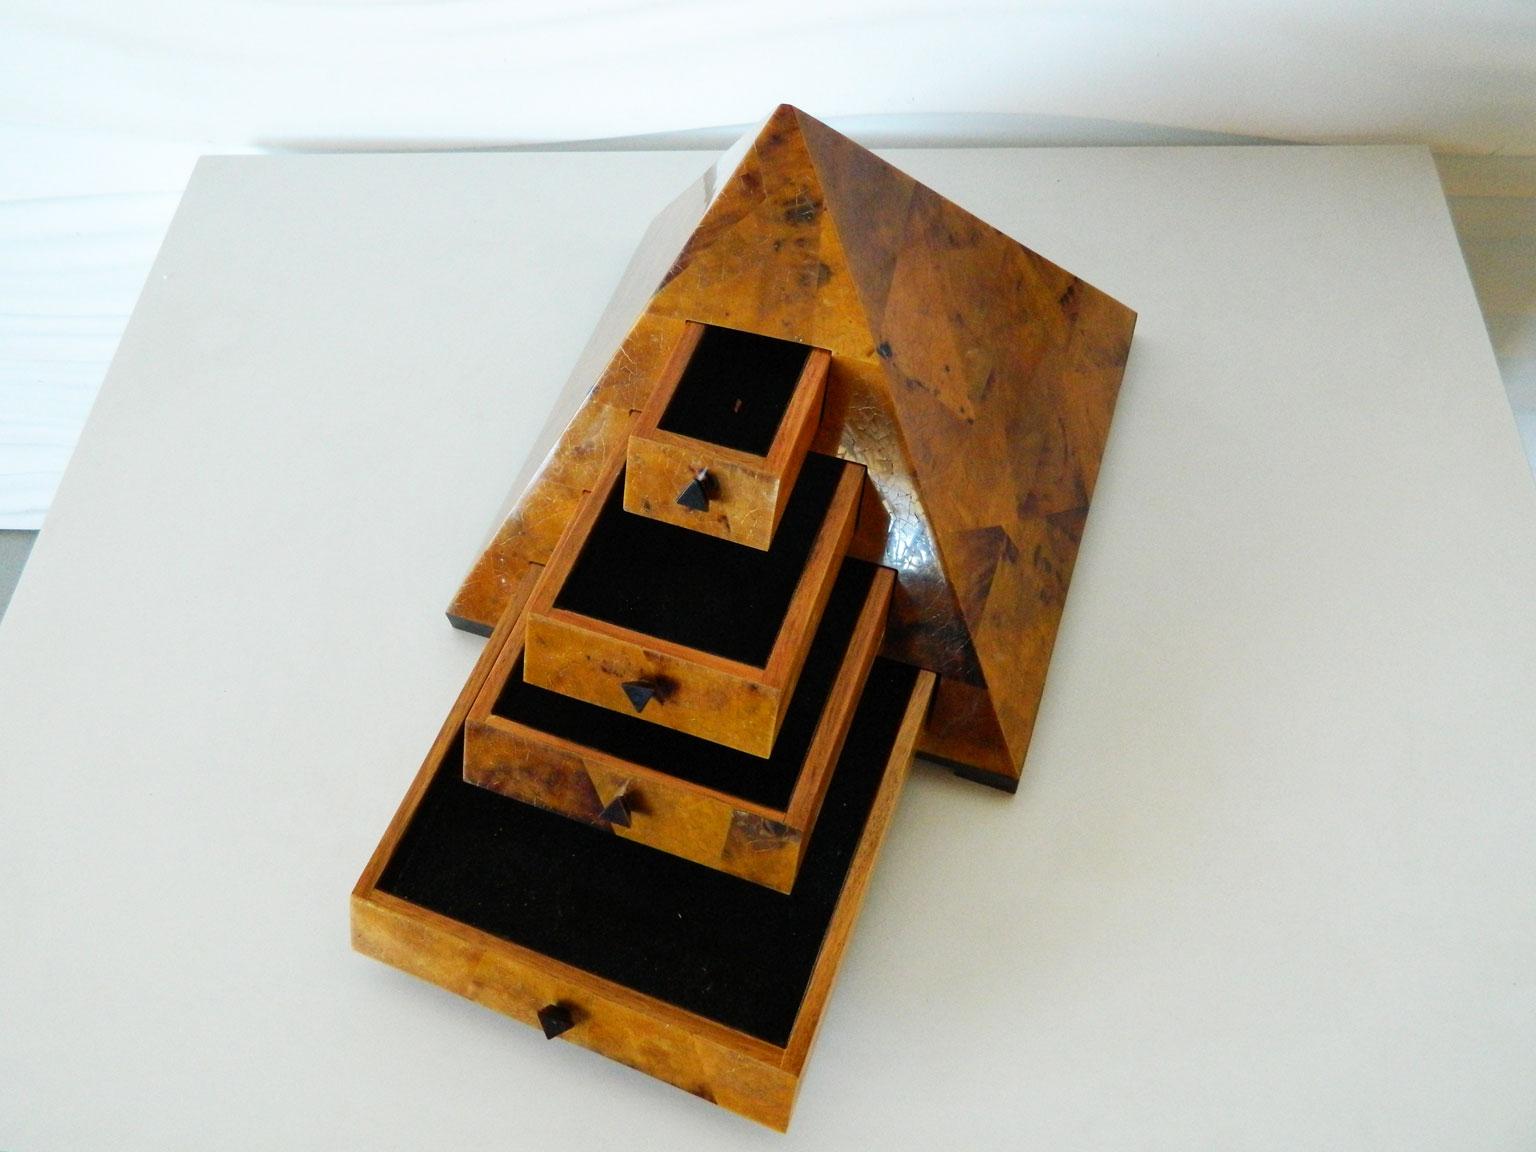 Burl Decorative Pyramid Box in the Style of Maitland Smith